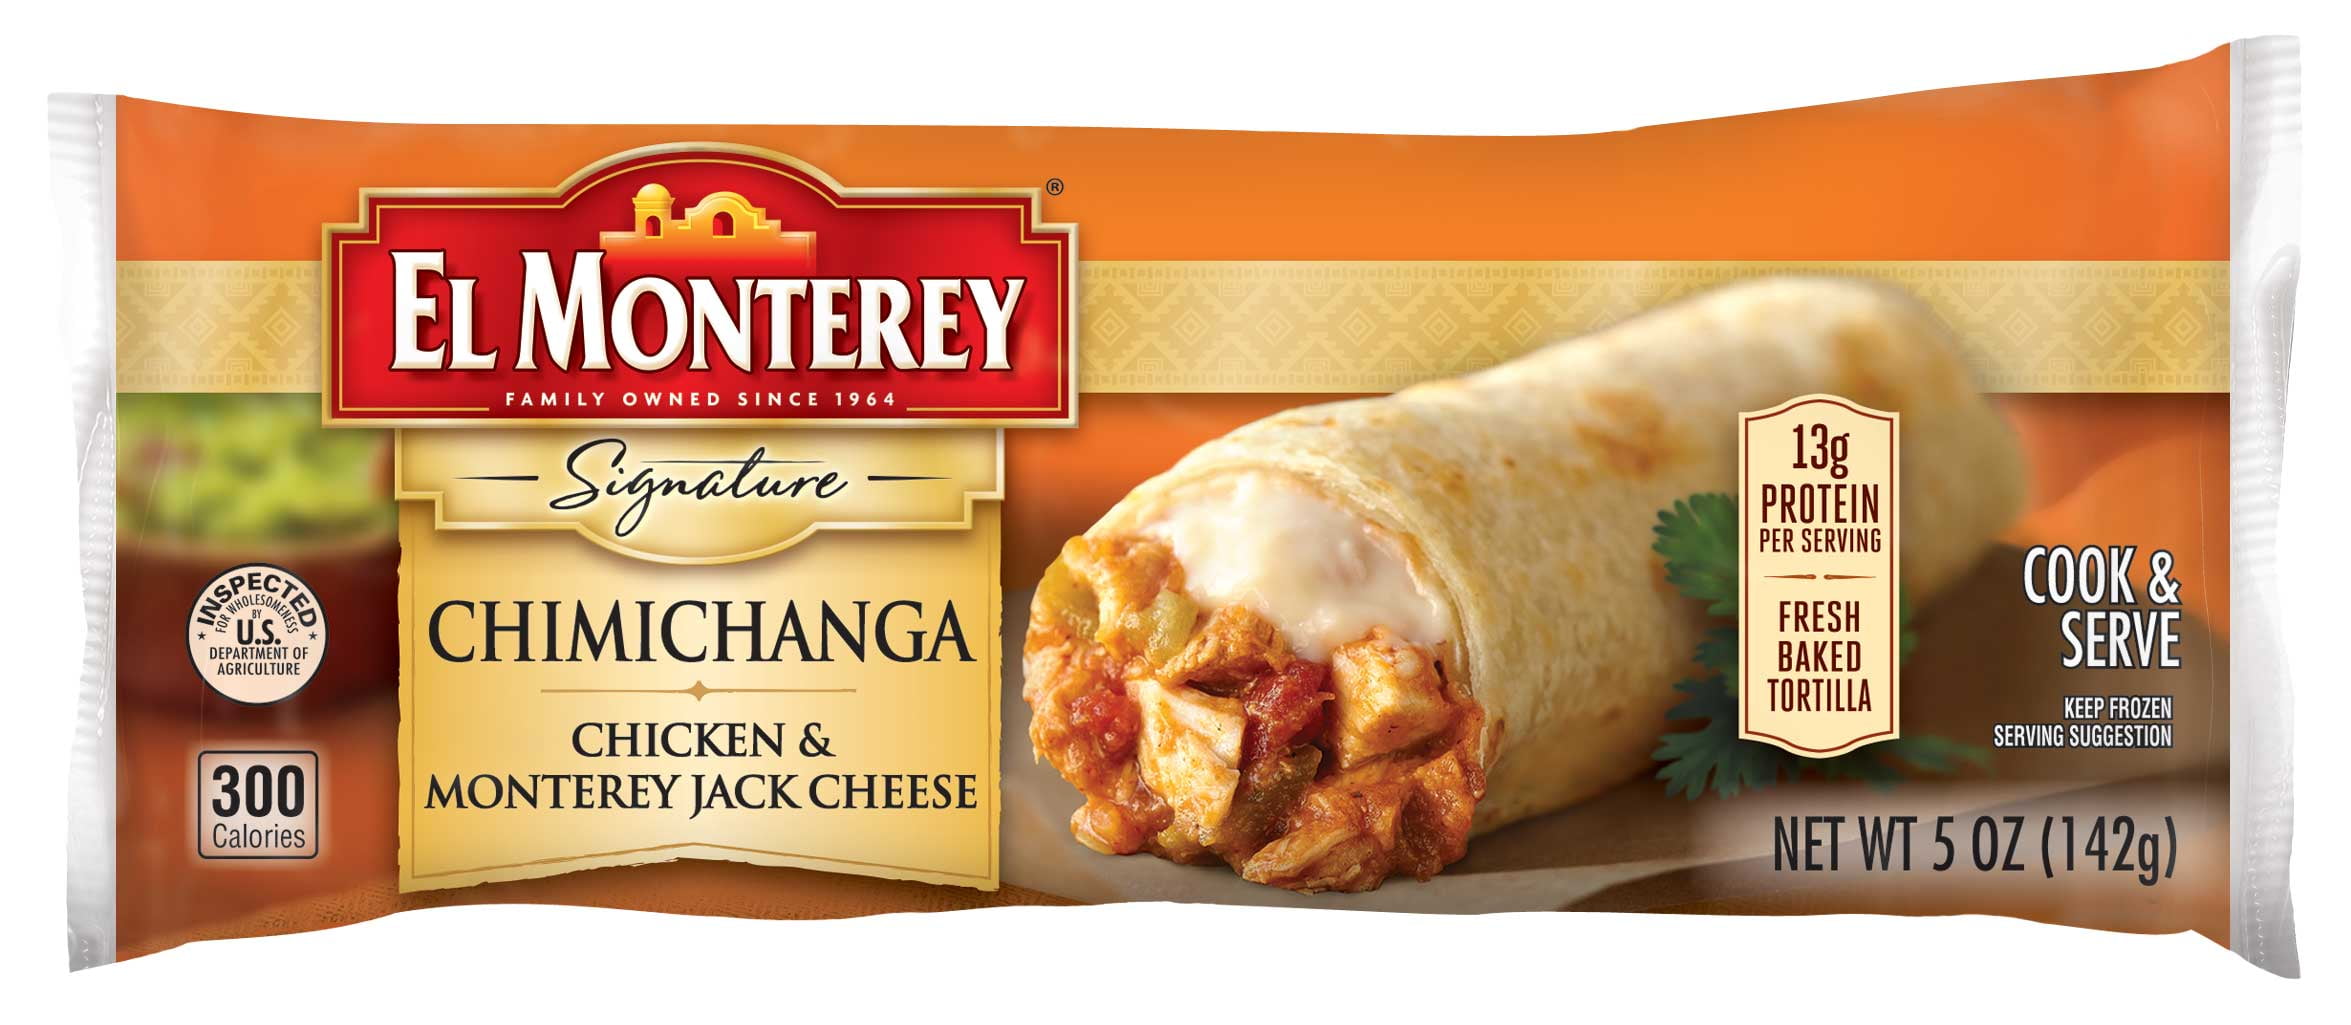 Chicken and Monterey Jack Cheese Chimichangas - El Monterey